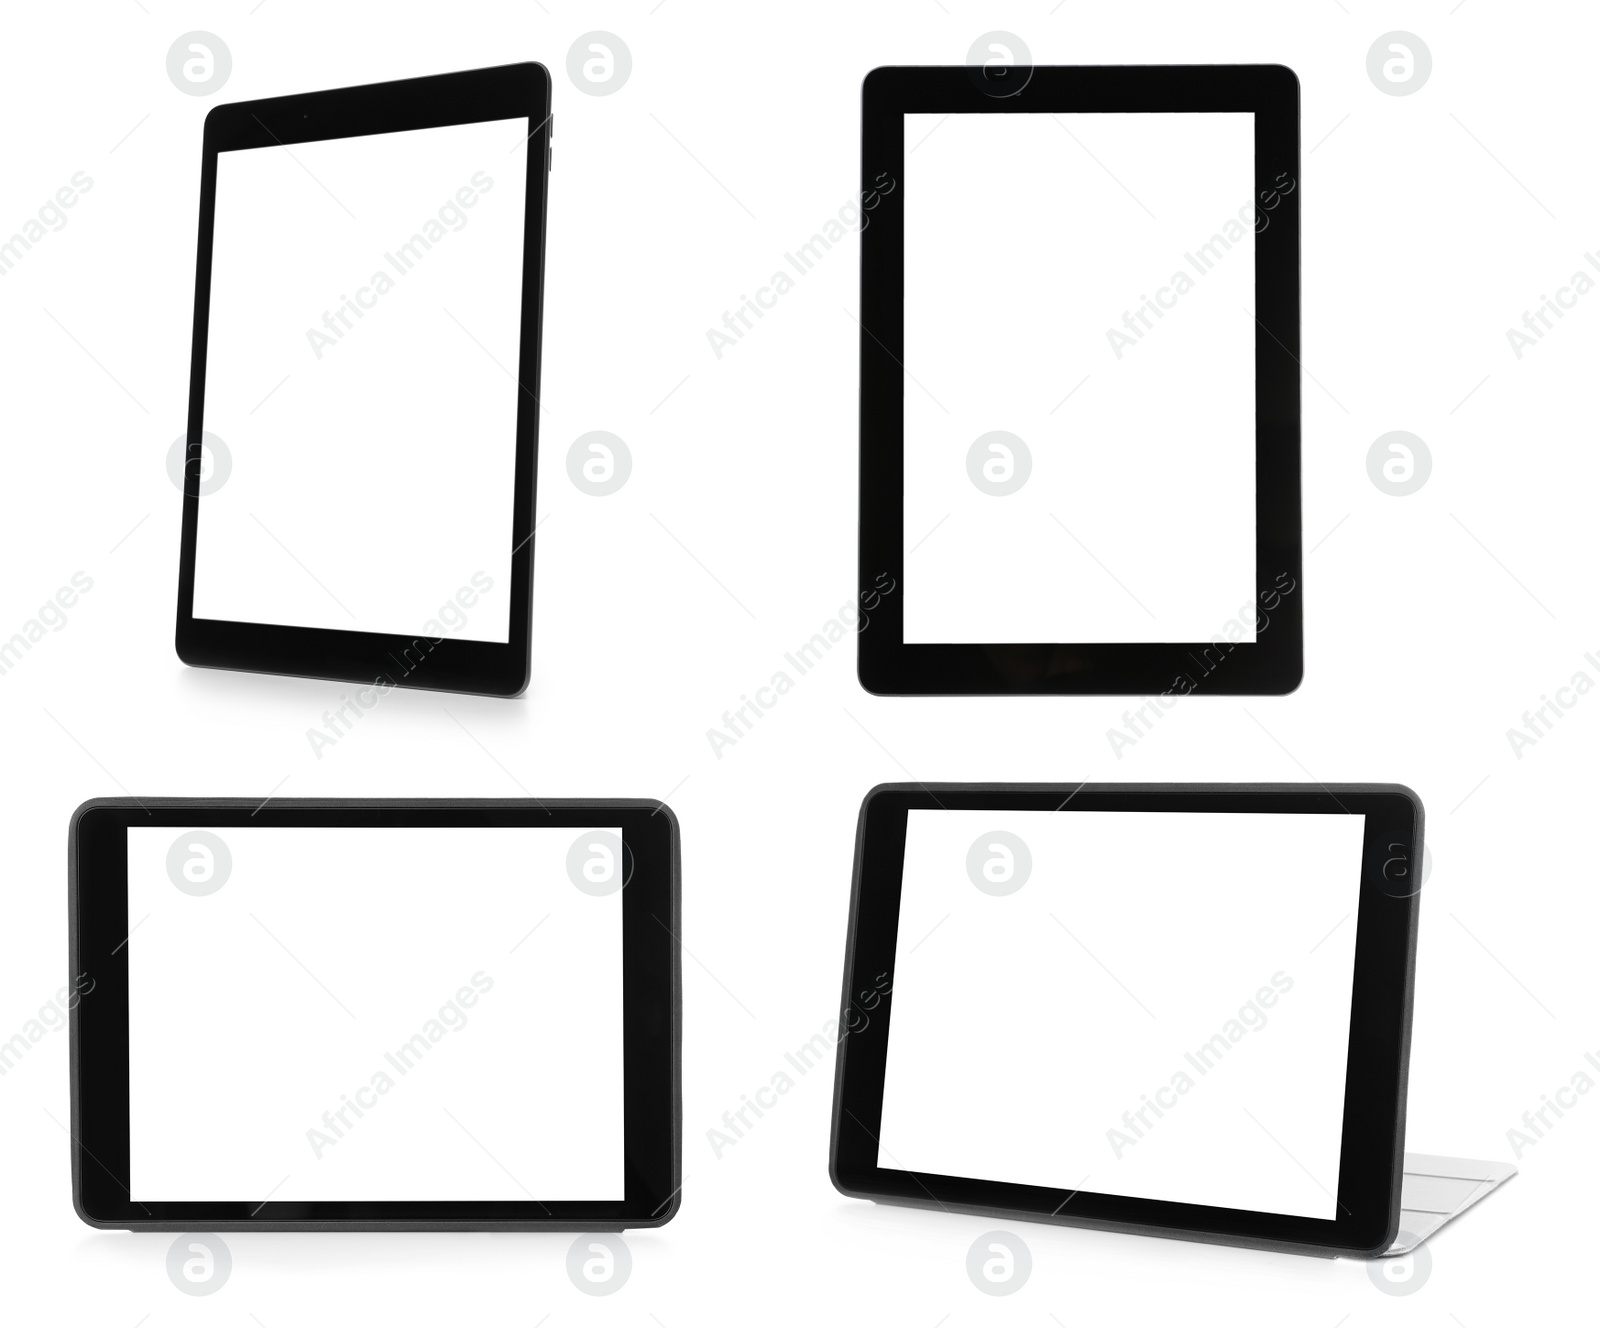 Image of Set of tablet computers on white background. Mockup for design